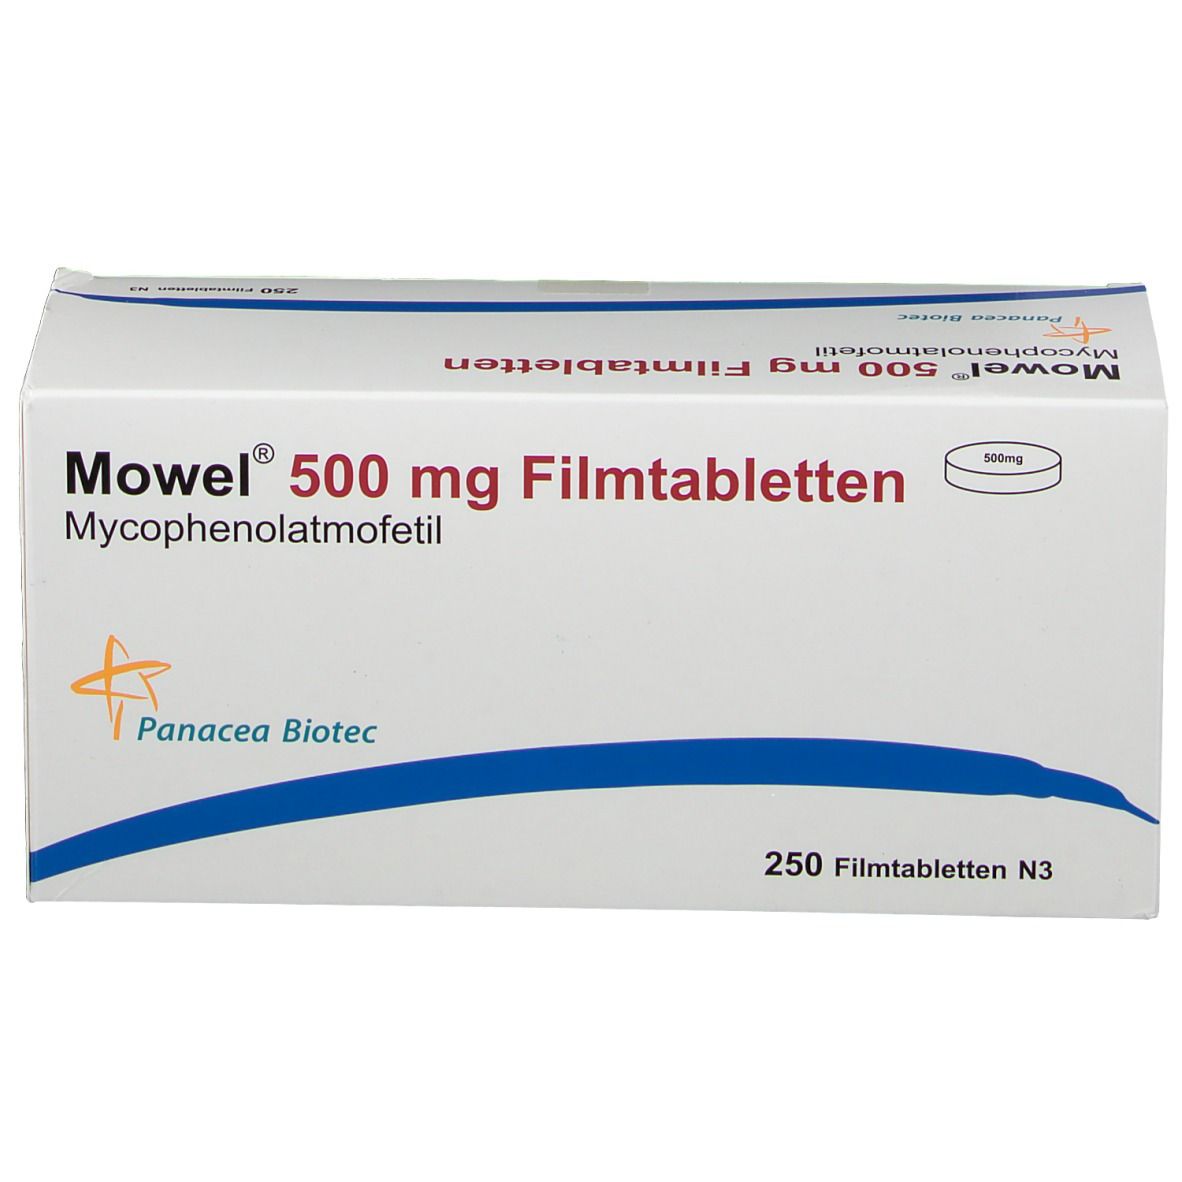 Mowel® 500 mg